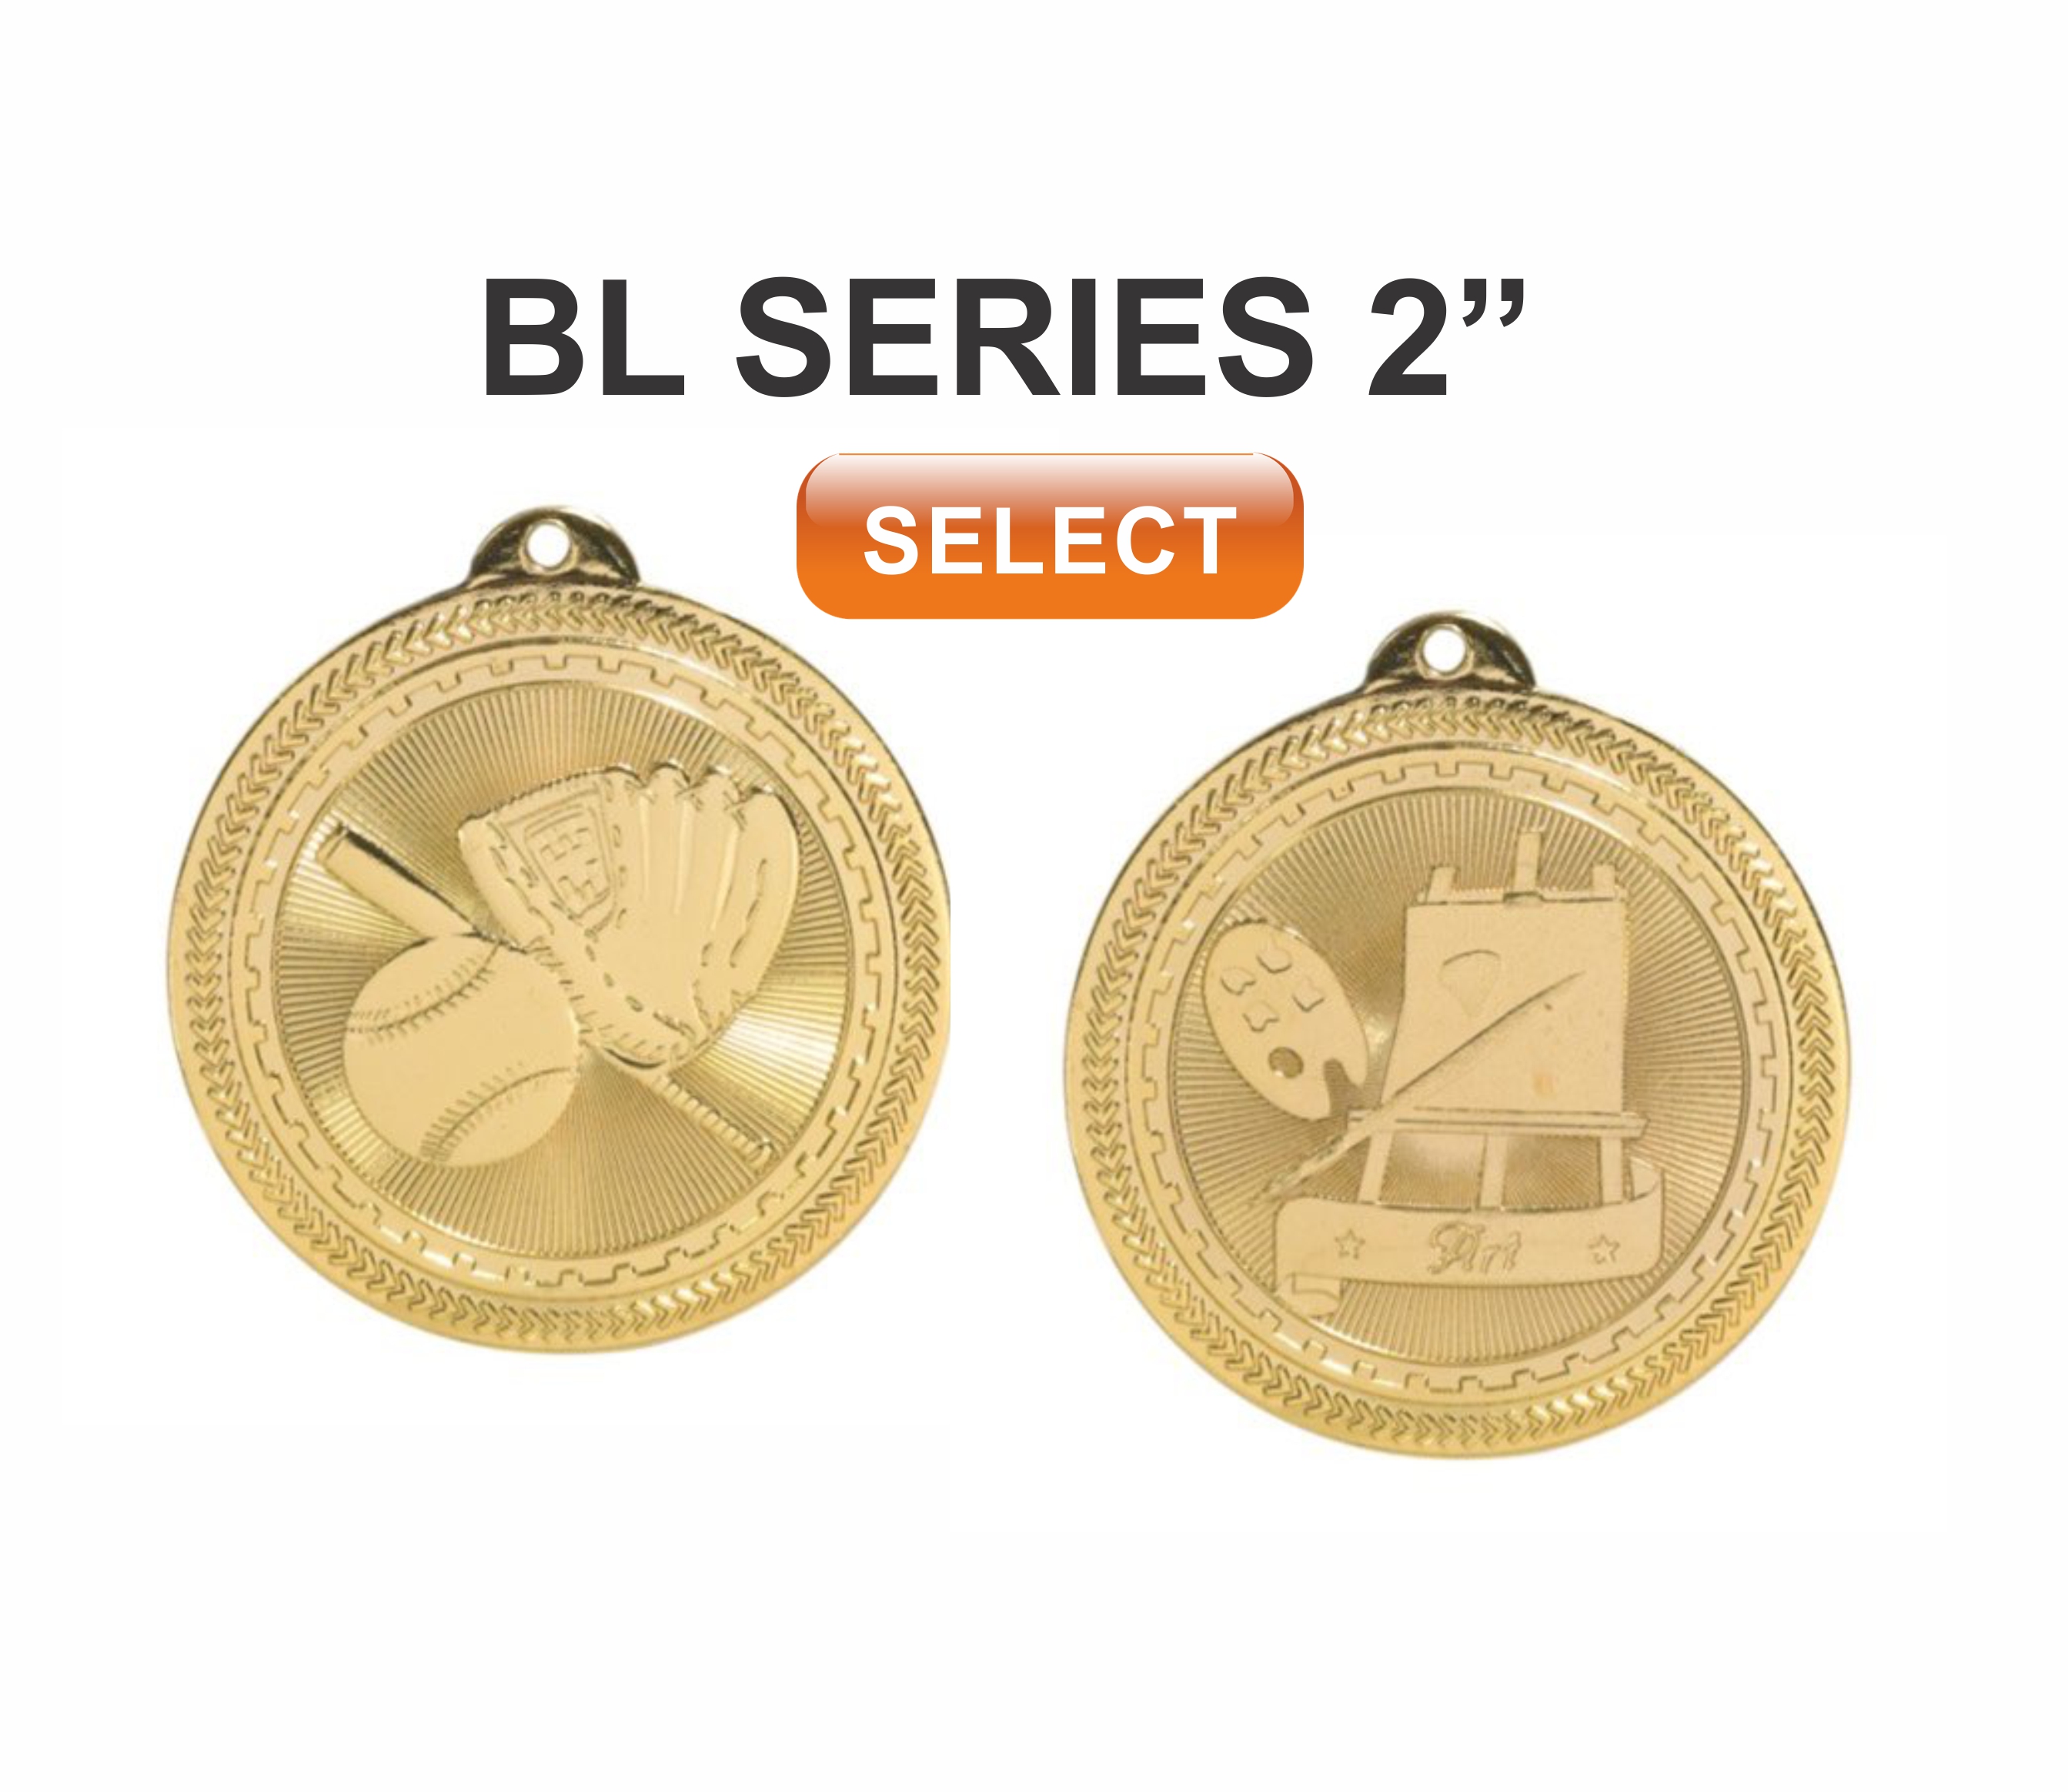 bl series award medals